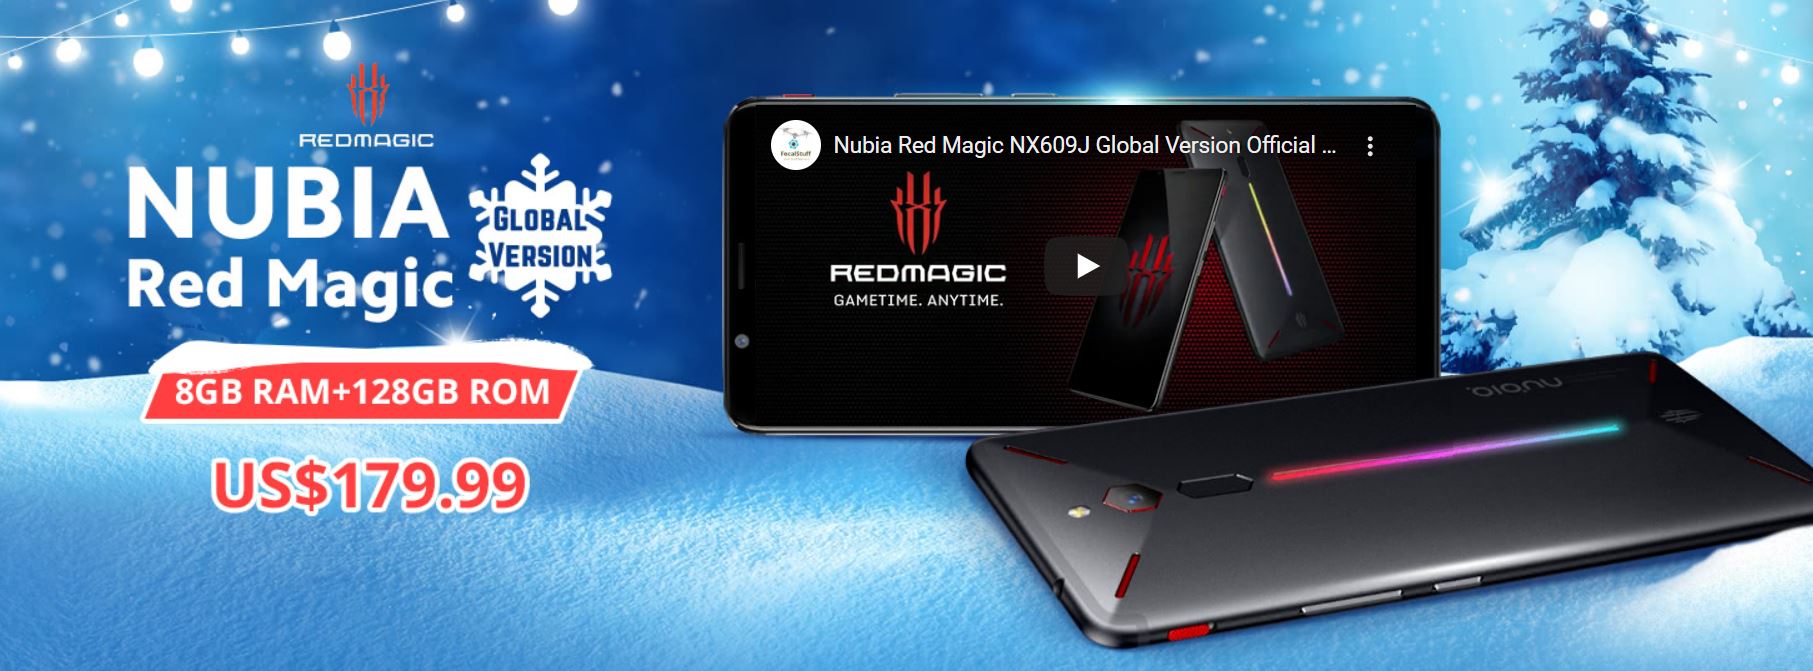 Smartfon Nubia Red Magic - wersja globalna